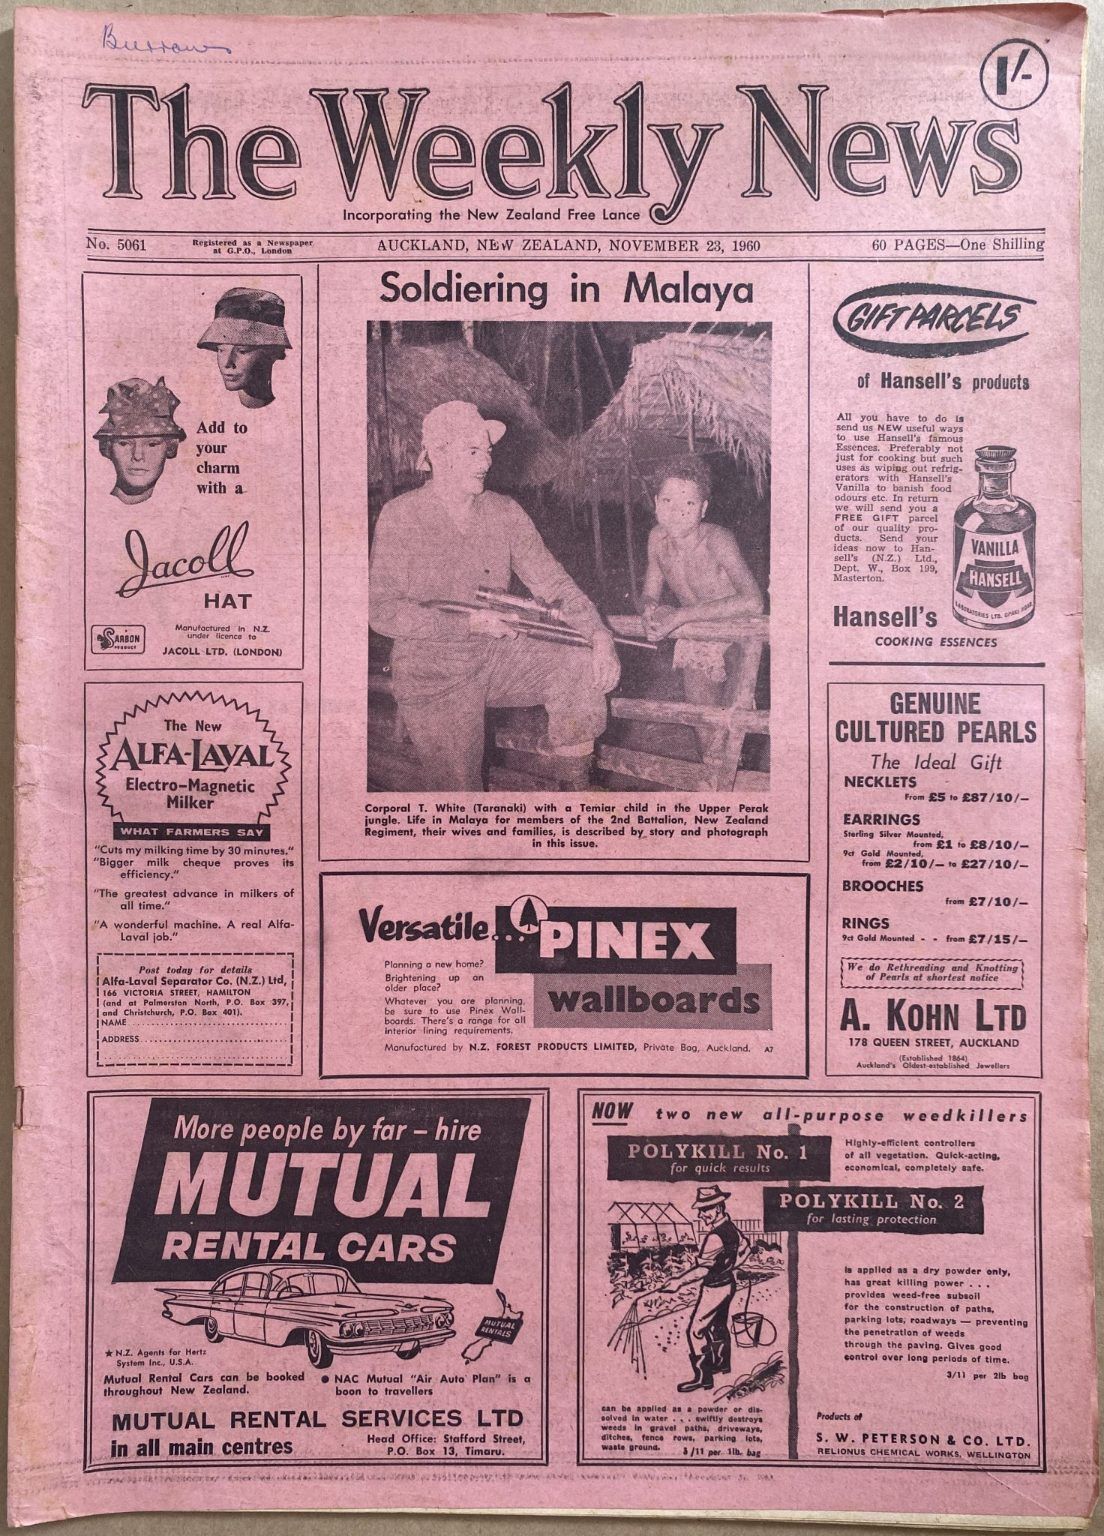 OLD NEWSPAPER: The Weekly News, No. 5061, 23 November 1960